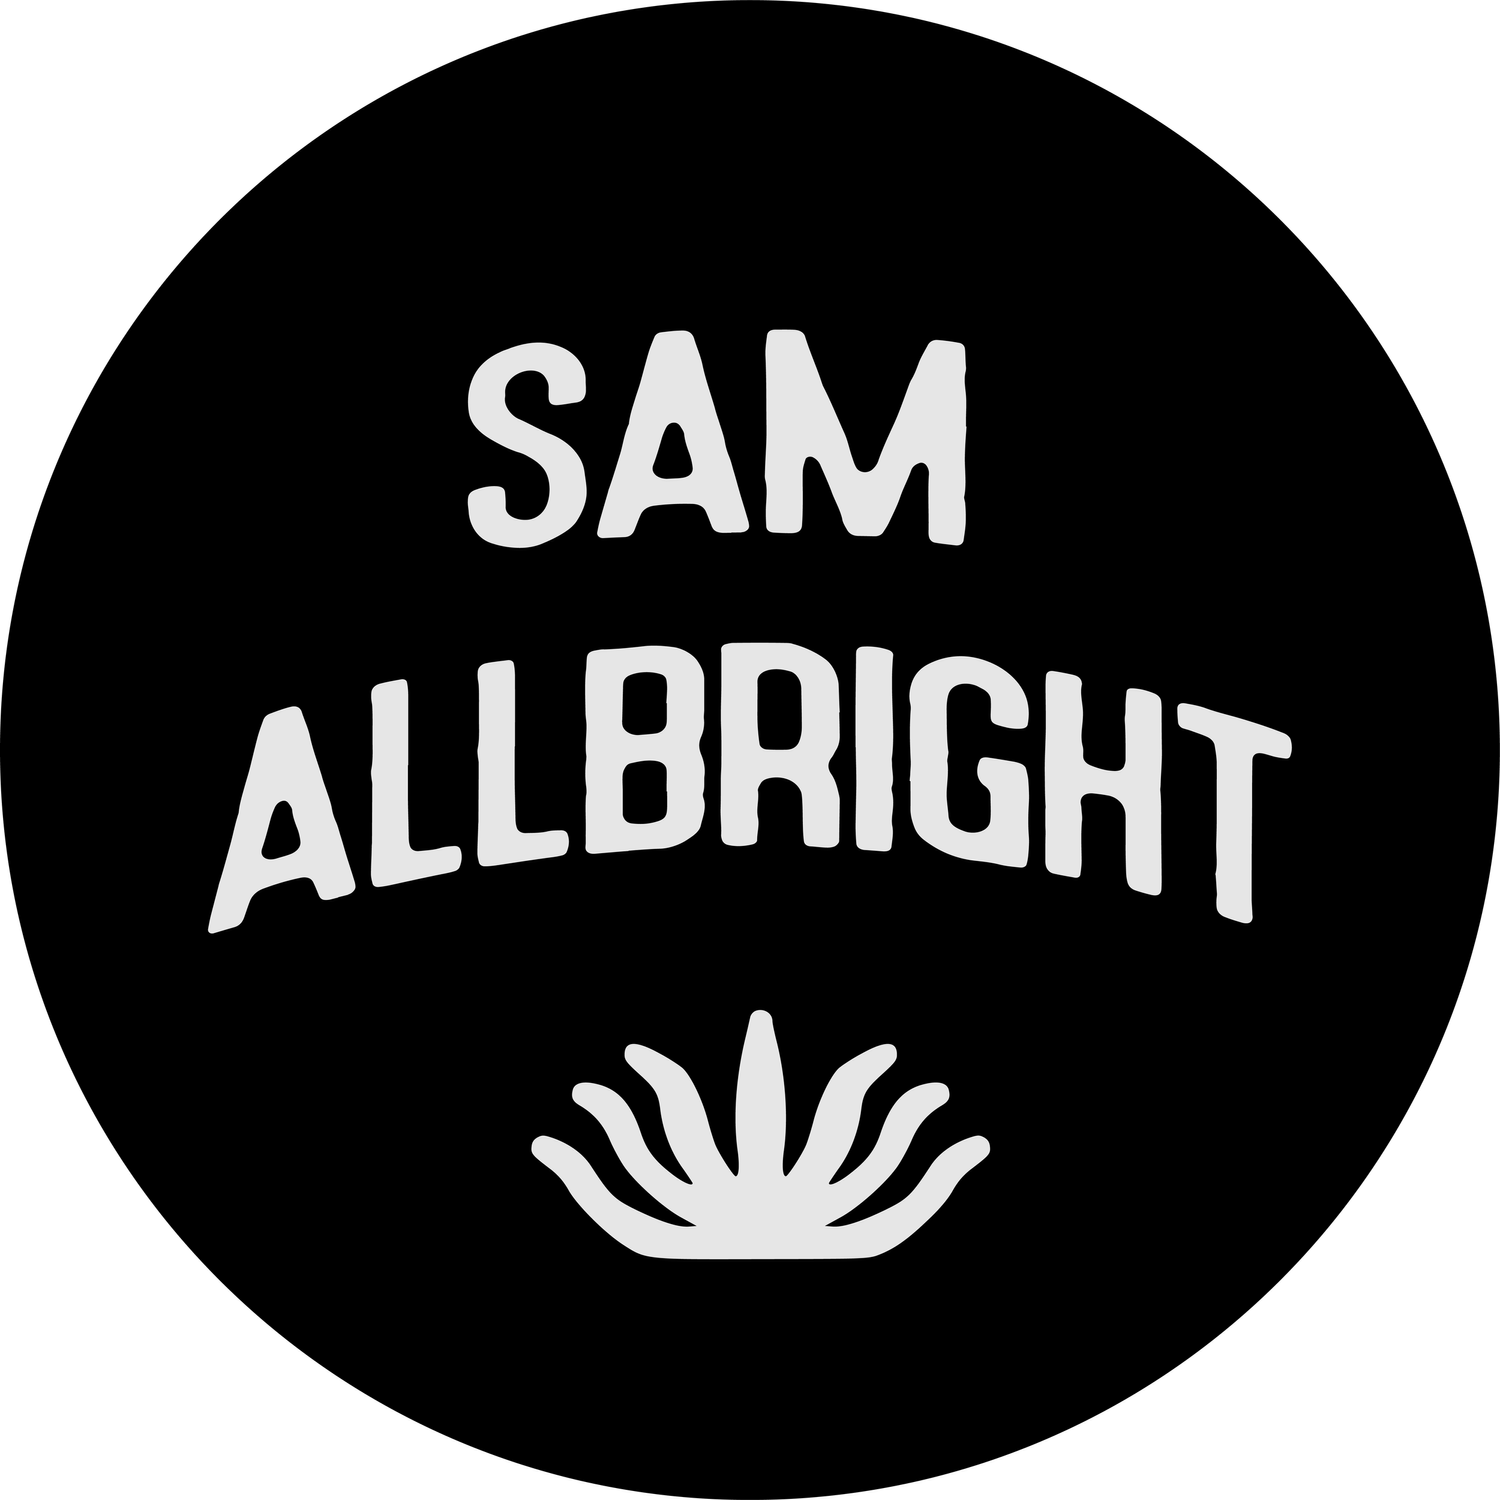 Sam Allbright